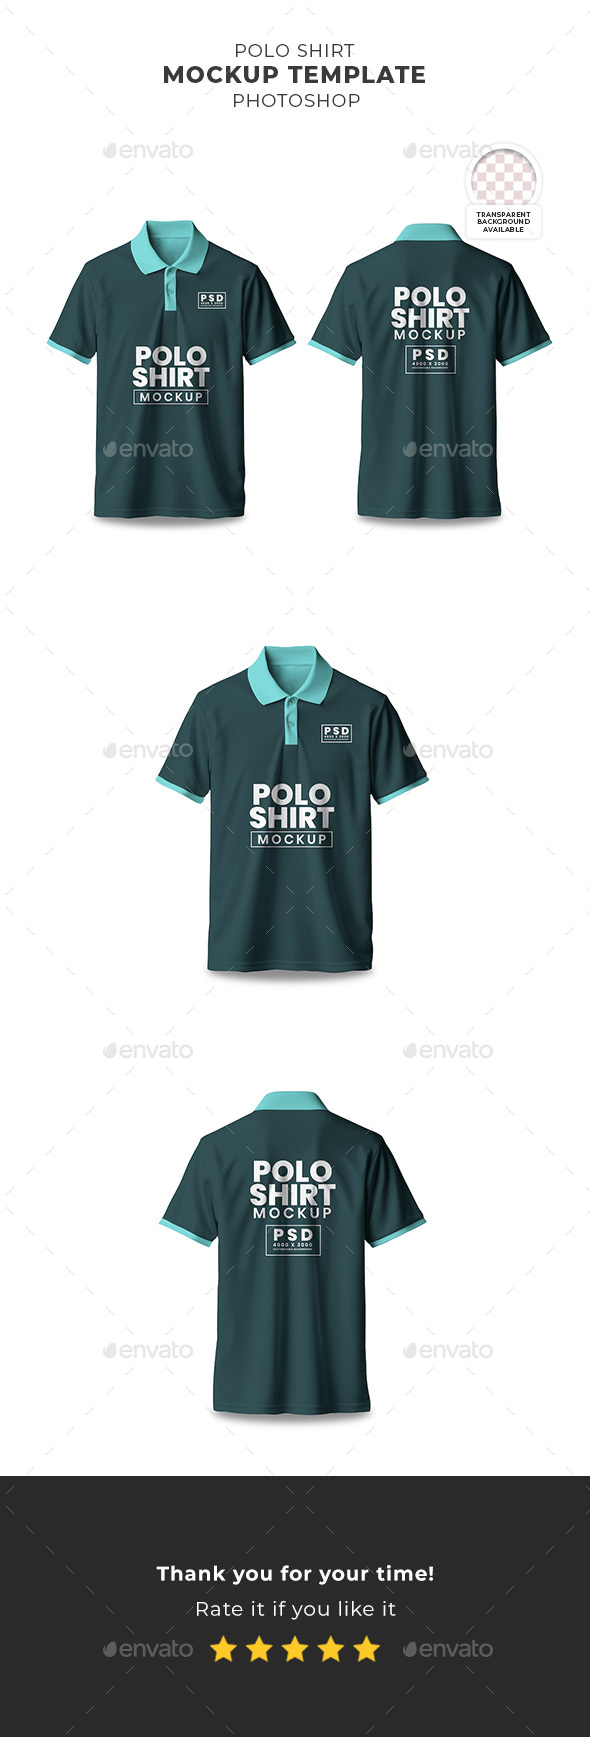 [DOWNLOAD]Polo Shirt Mockup Template